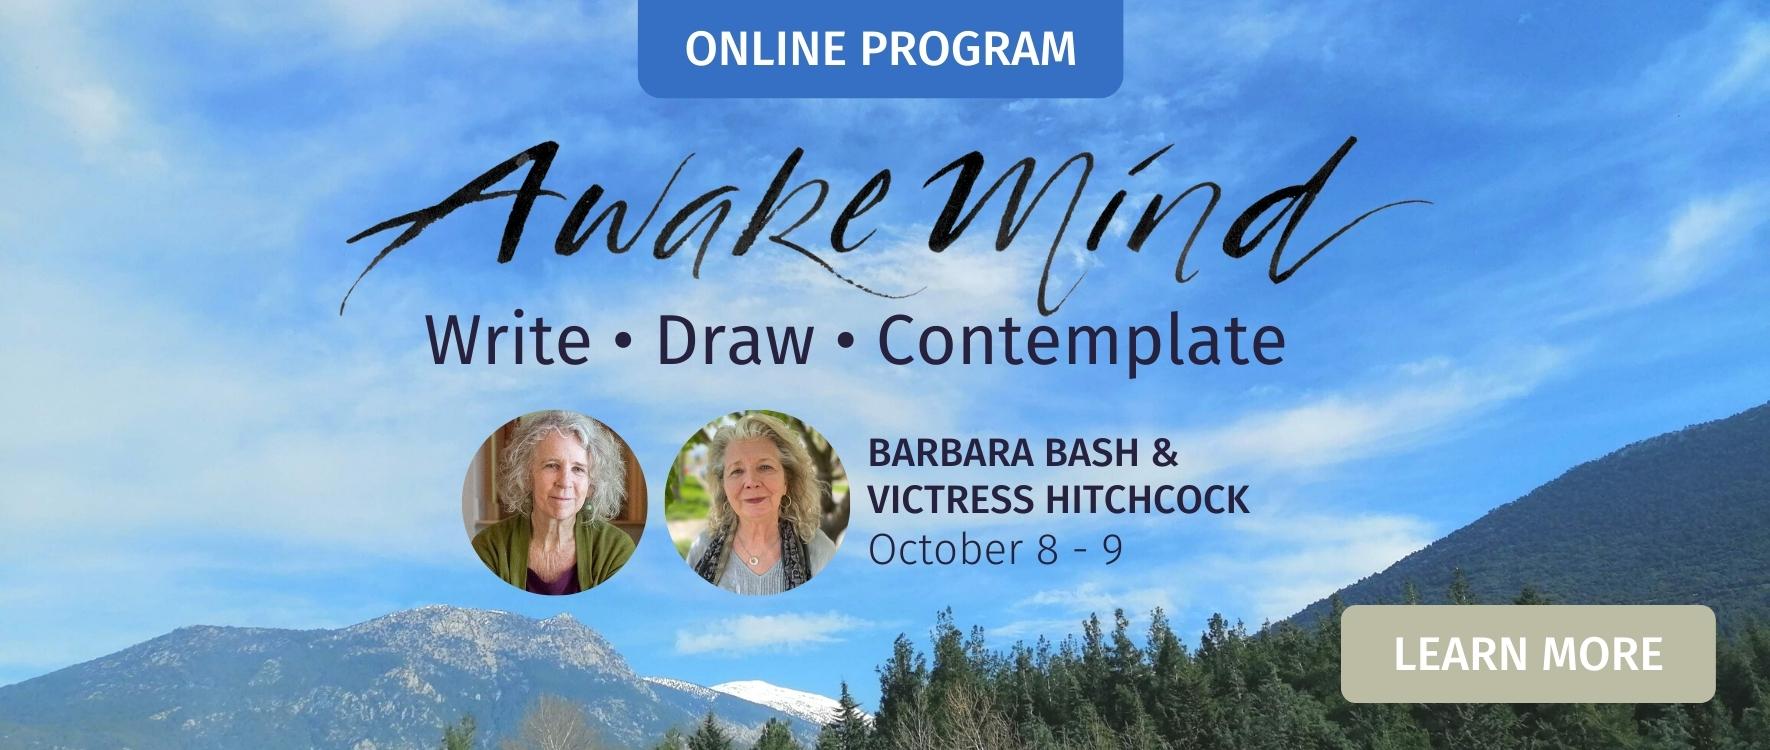 awake mind - write, draw, contemplate online retreat october 8-9, 2022